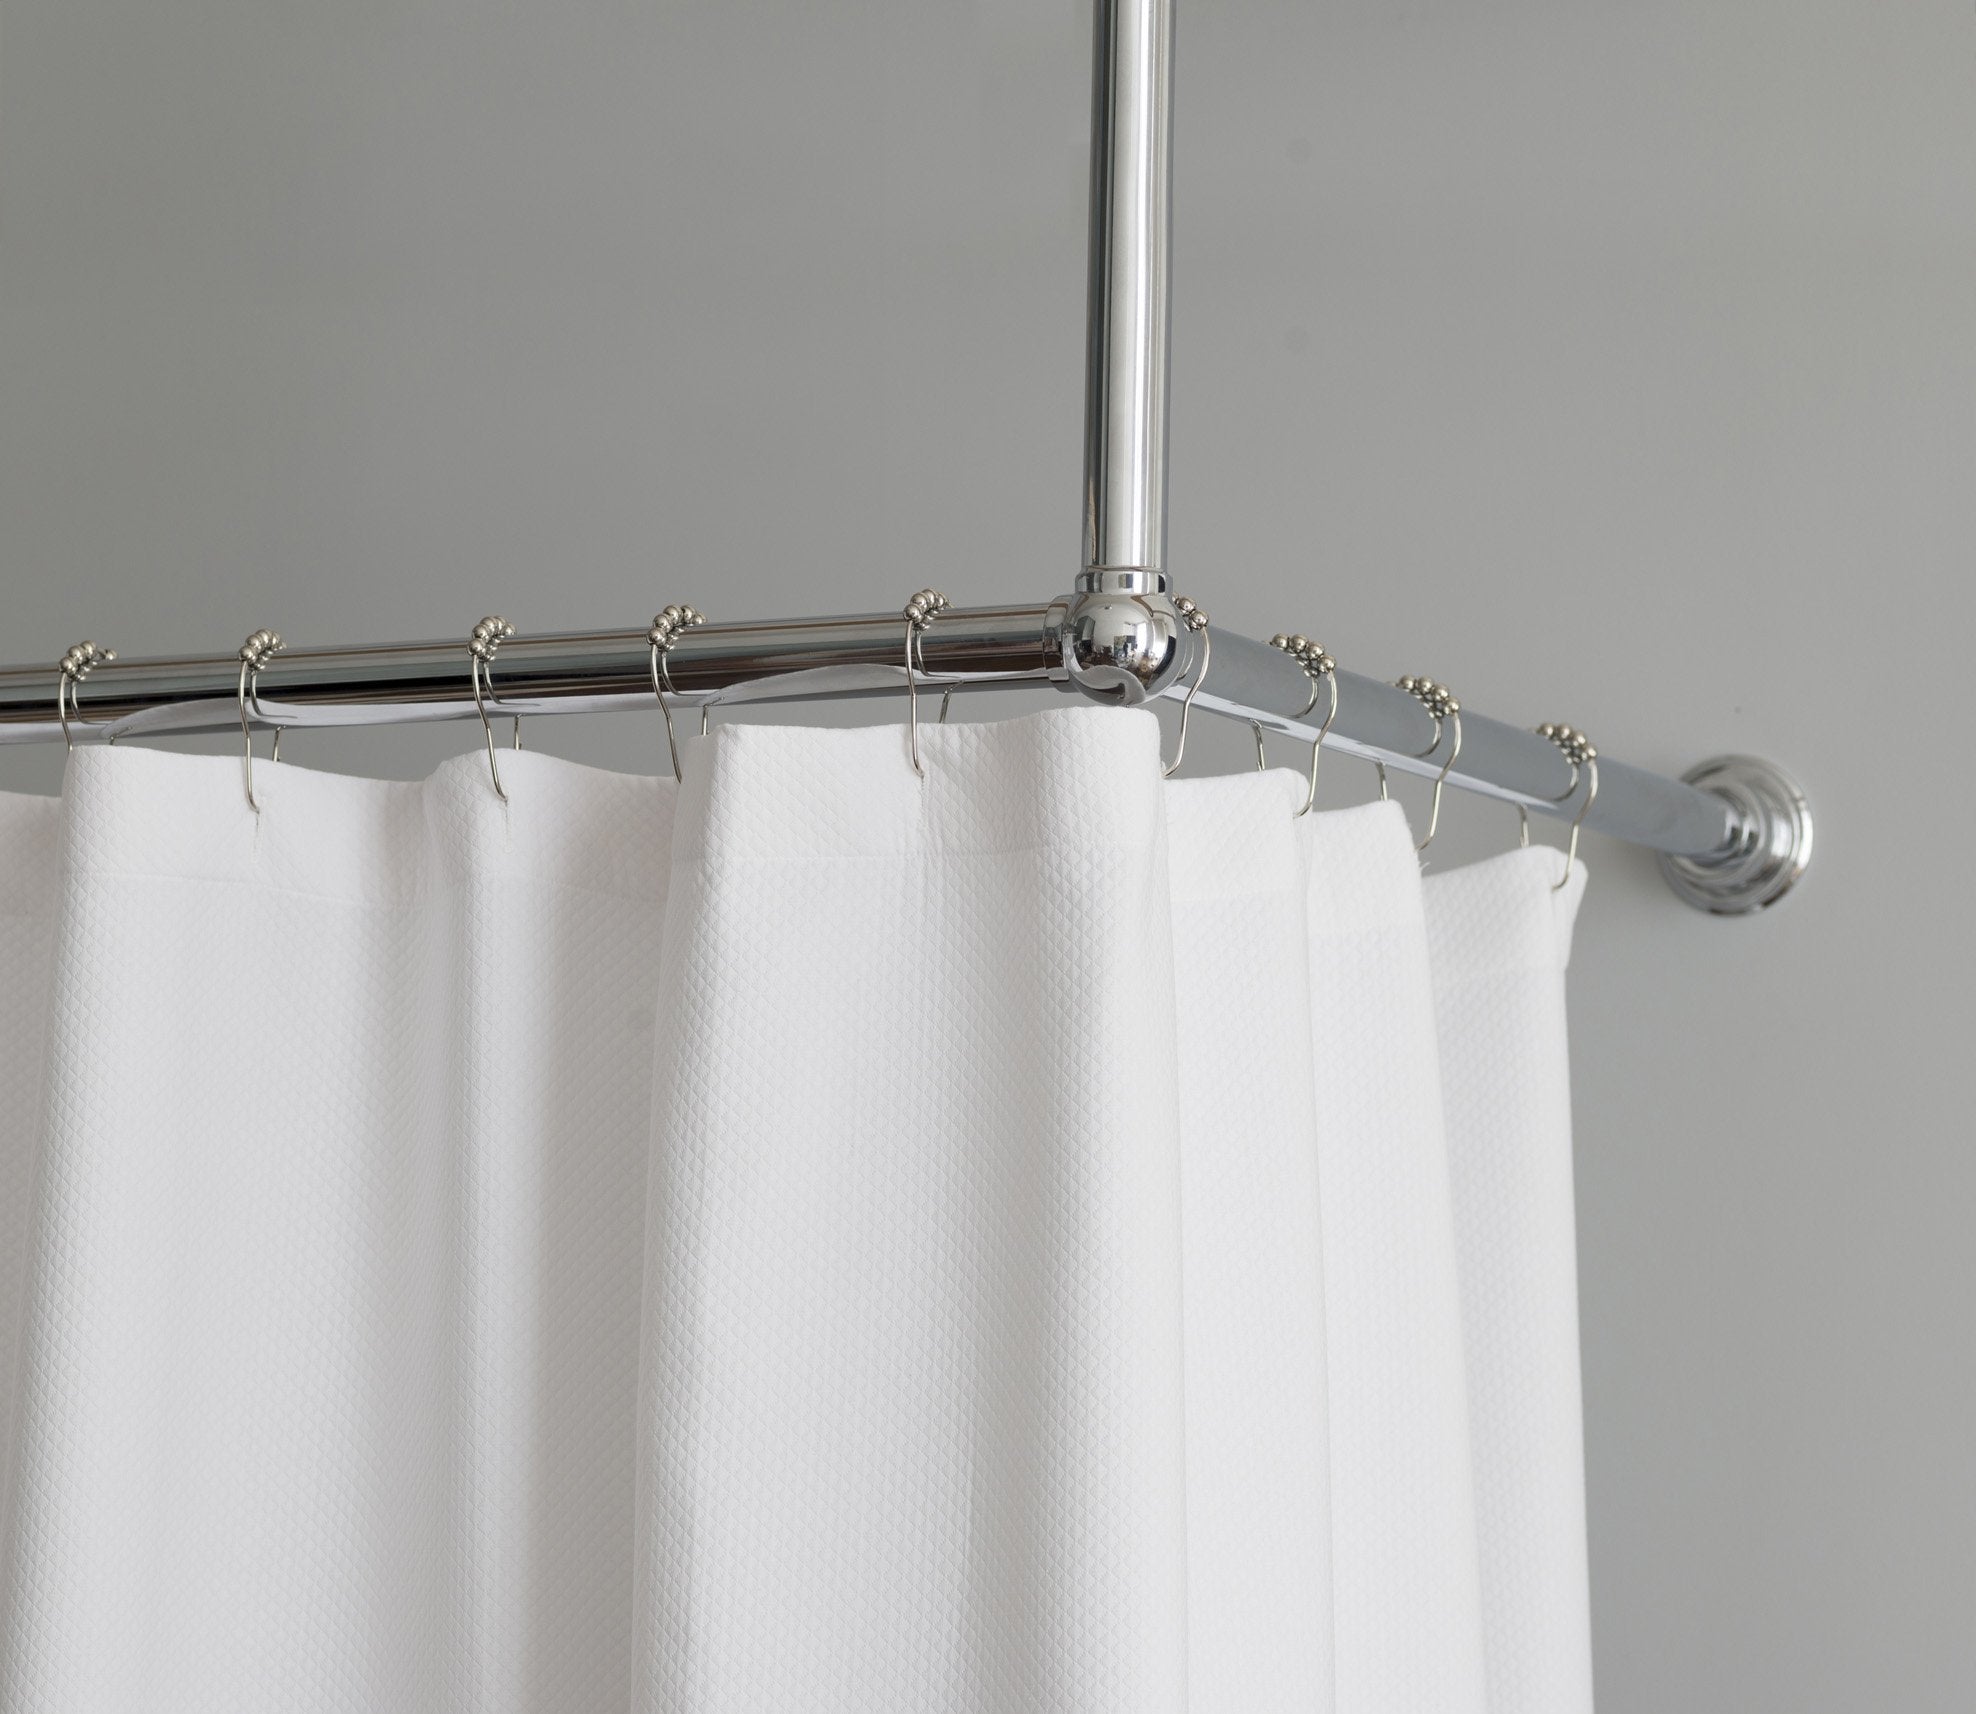 Shower Curtain Rail L-Shape Rail Product Image 1